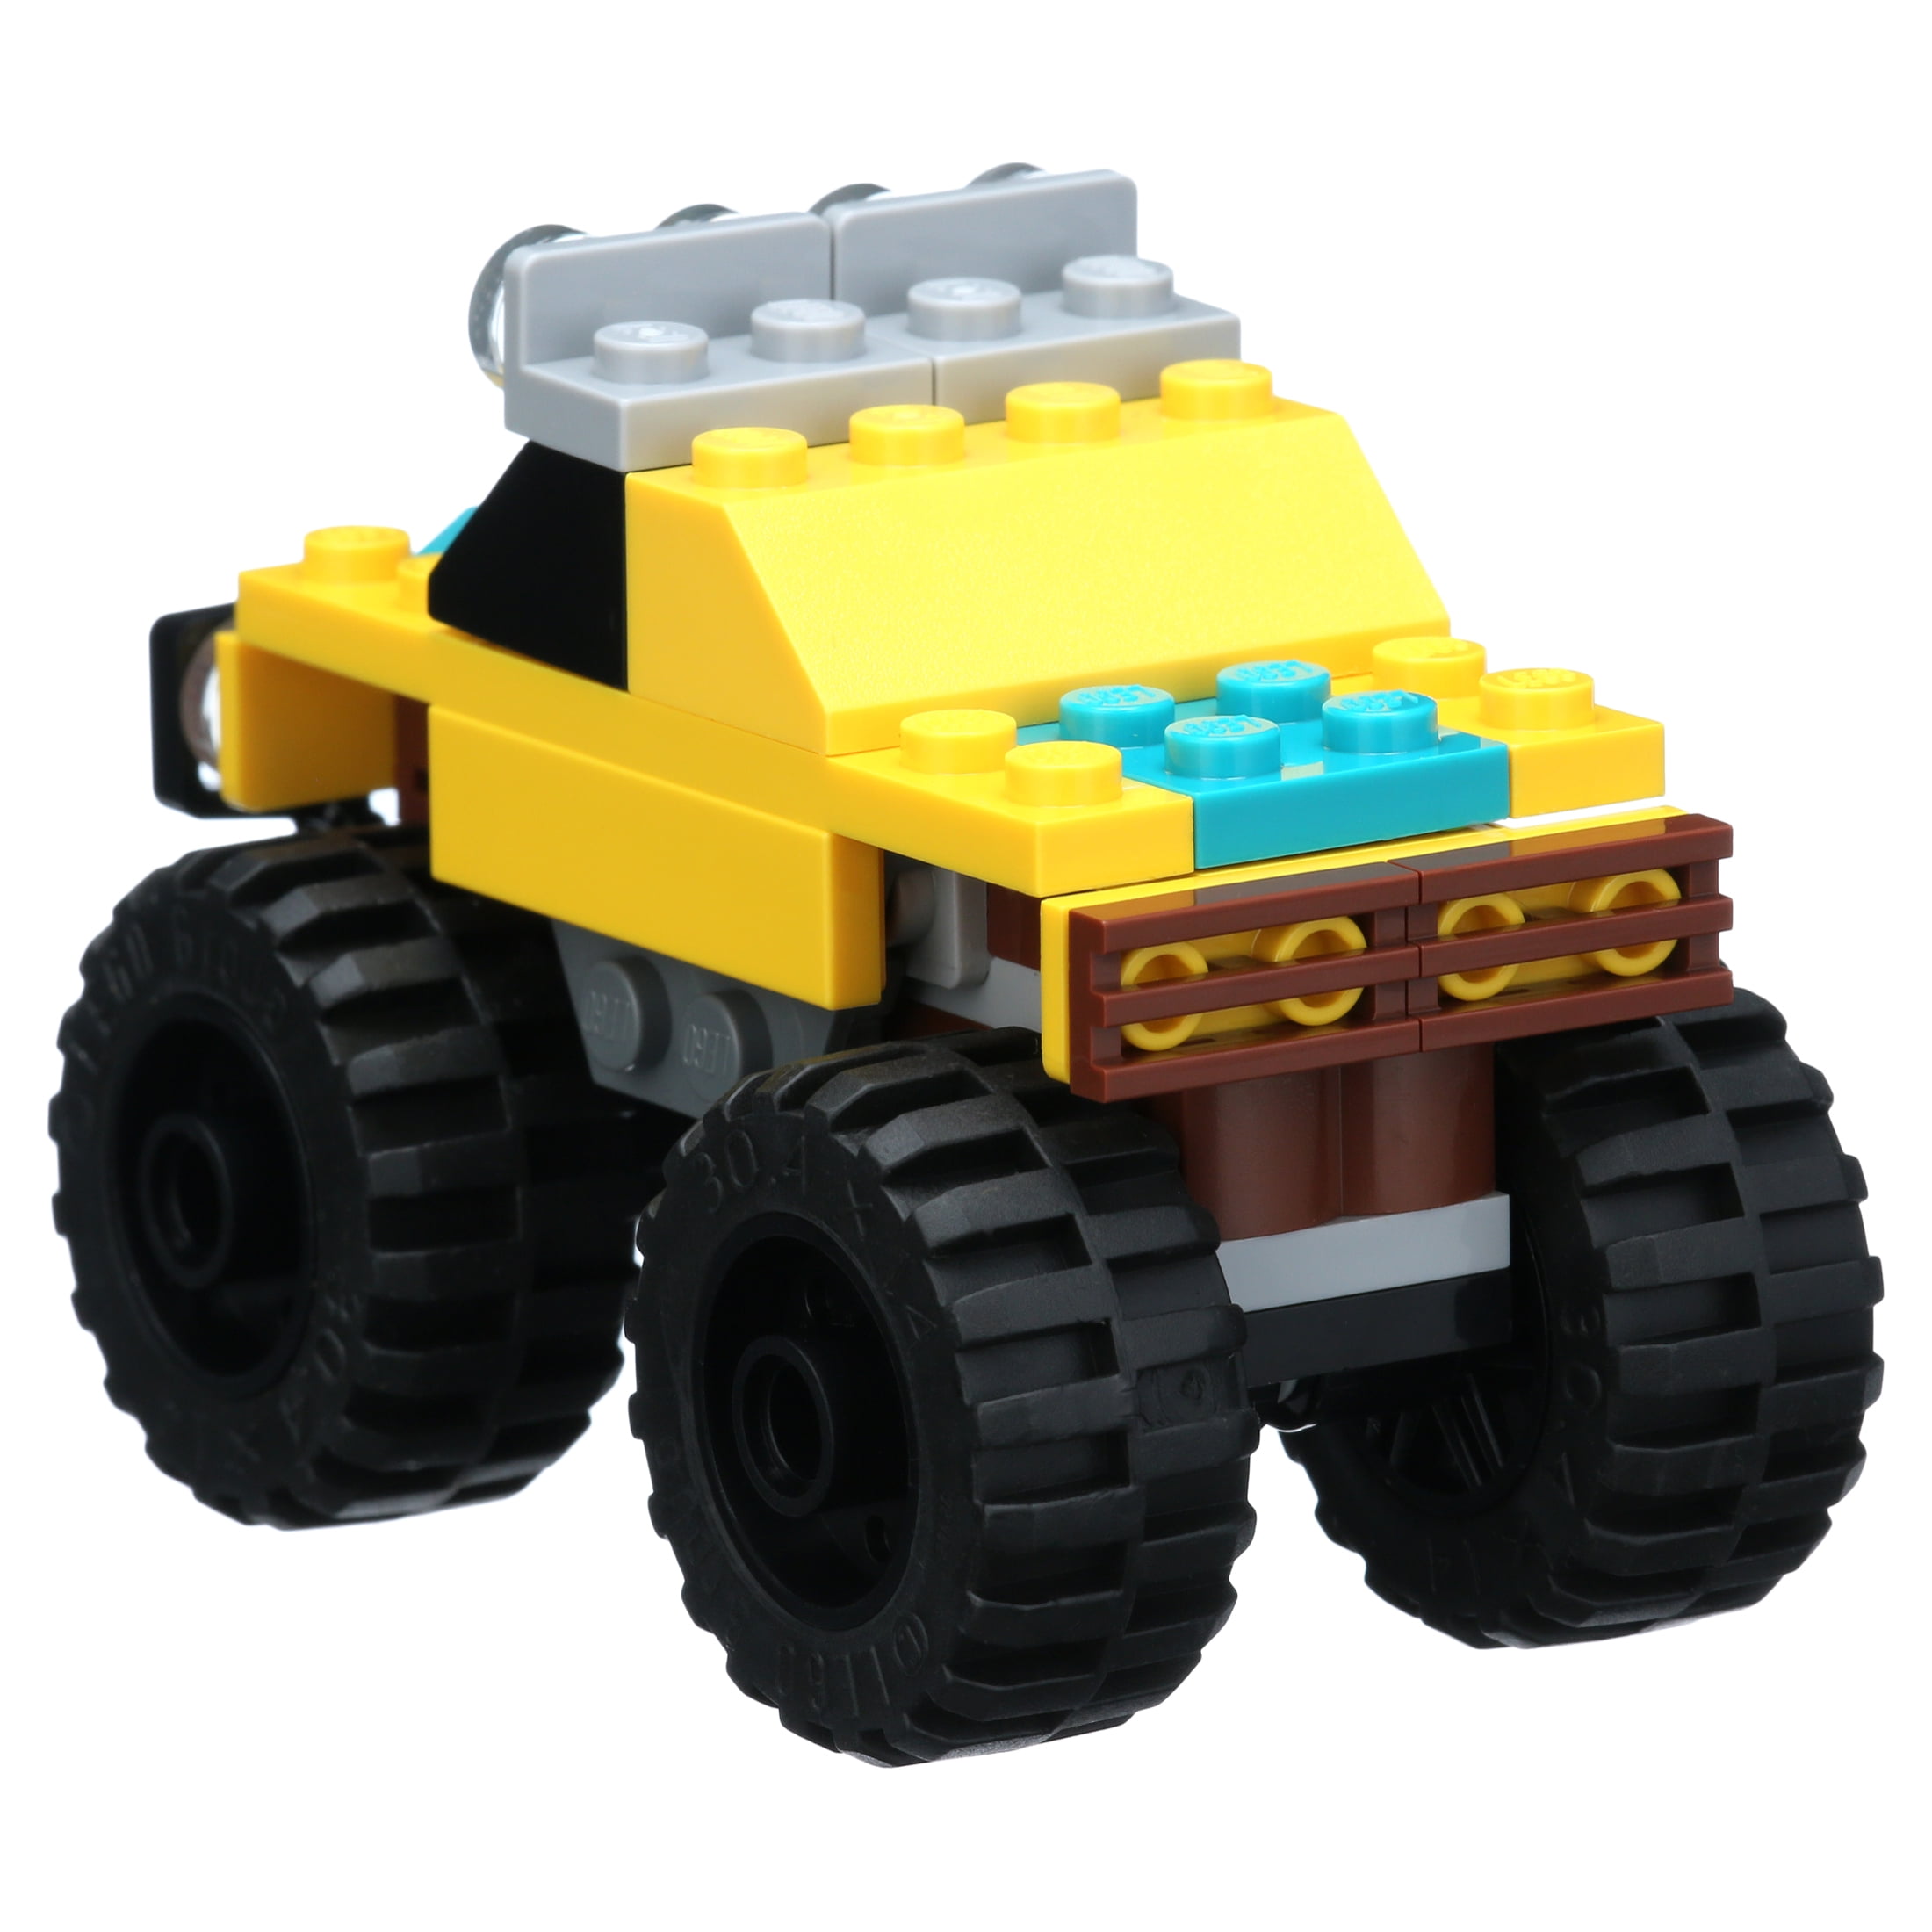 LEGO Creator Monster Truck - Walmart.com